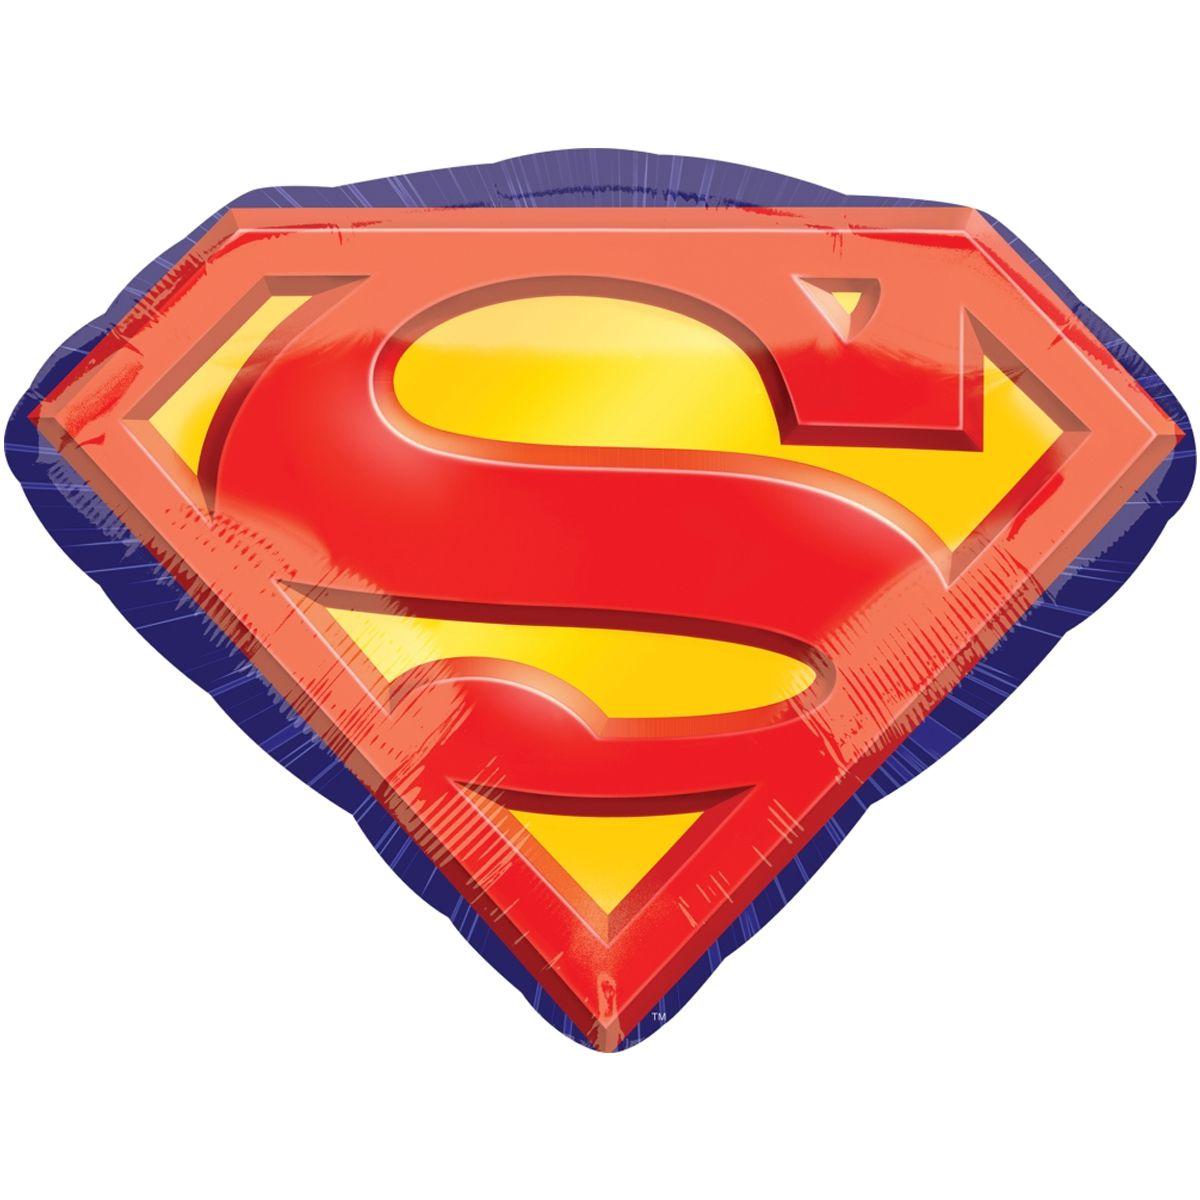 A 38" Фігура Супермен емблема Фольговані кулі — В УП